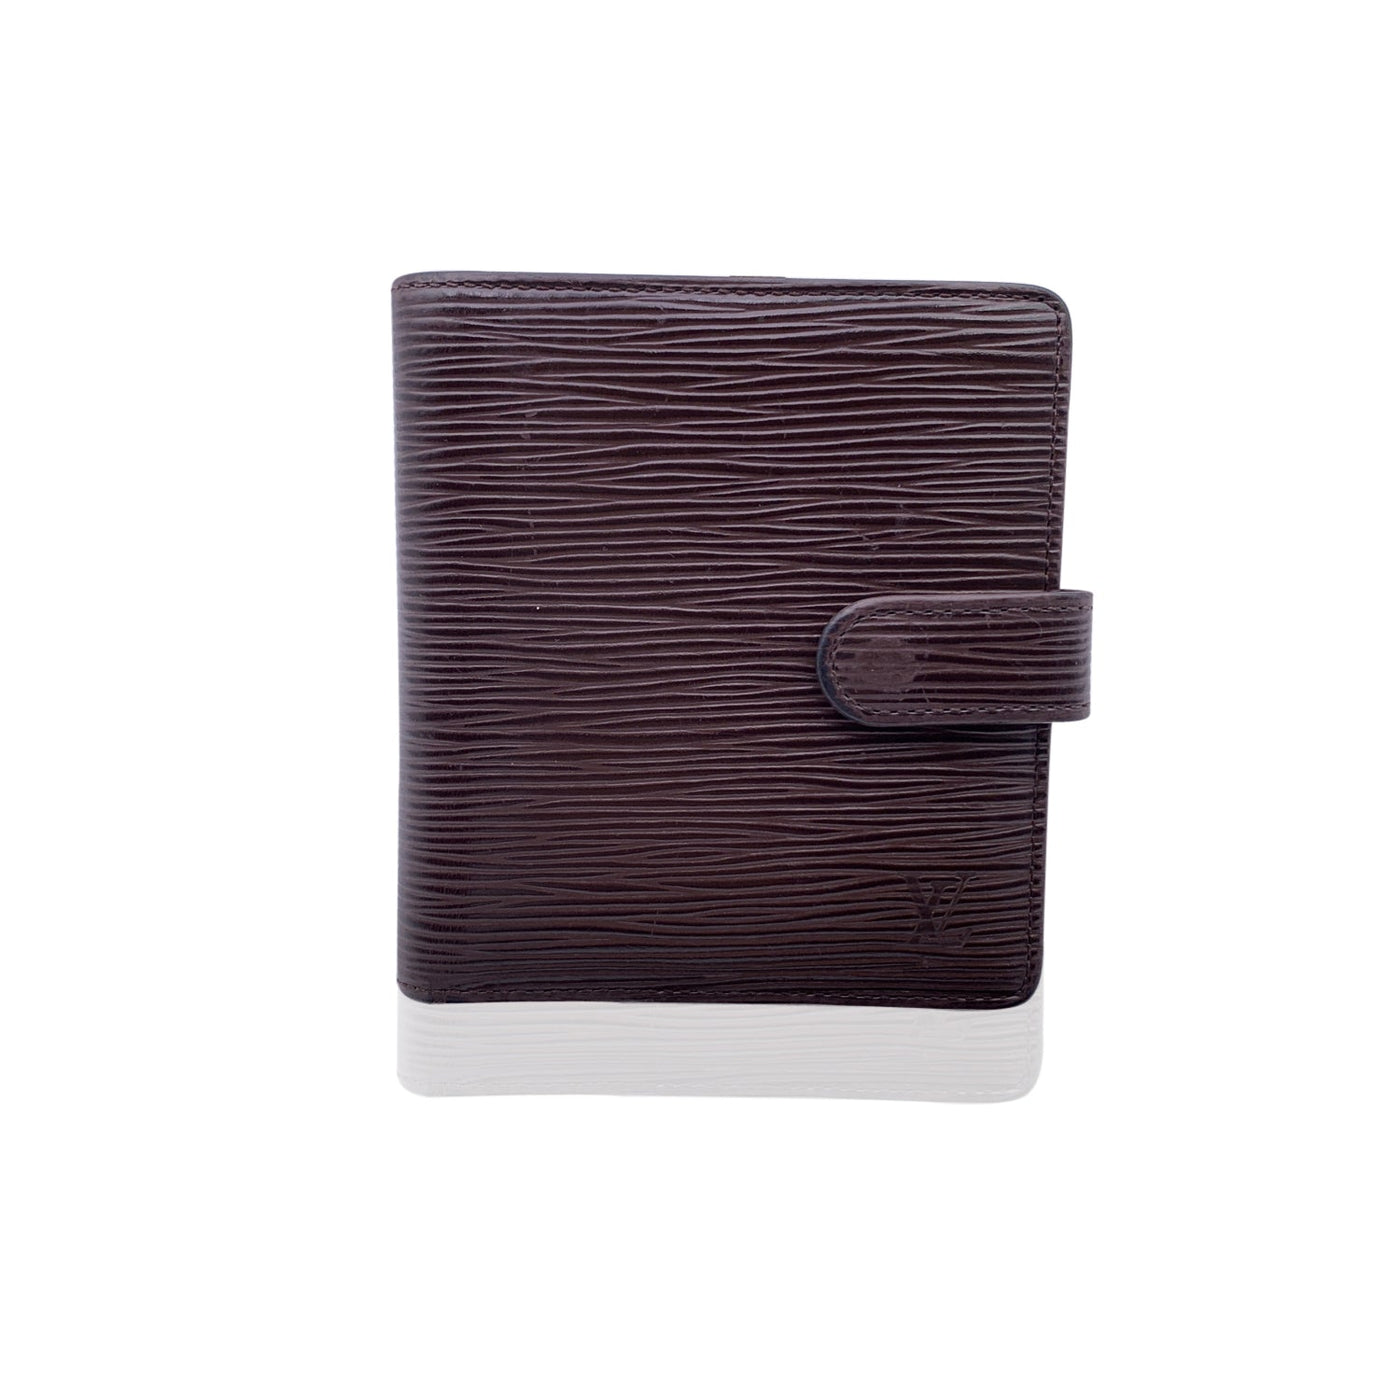 Louis Vuitton Black Epi Small Wallet!